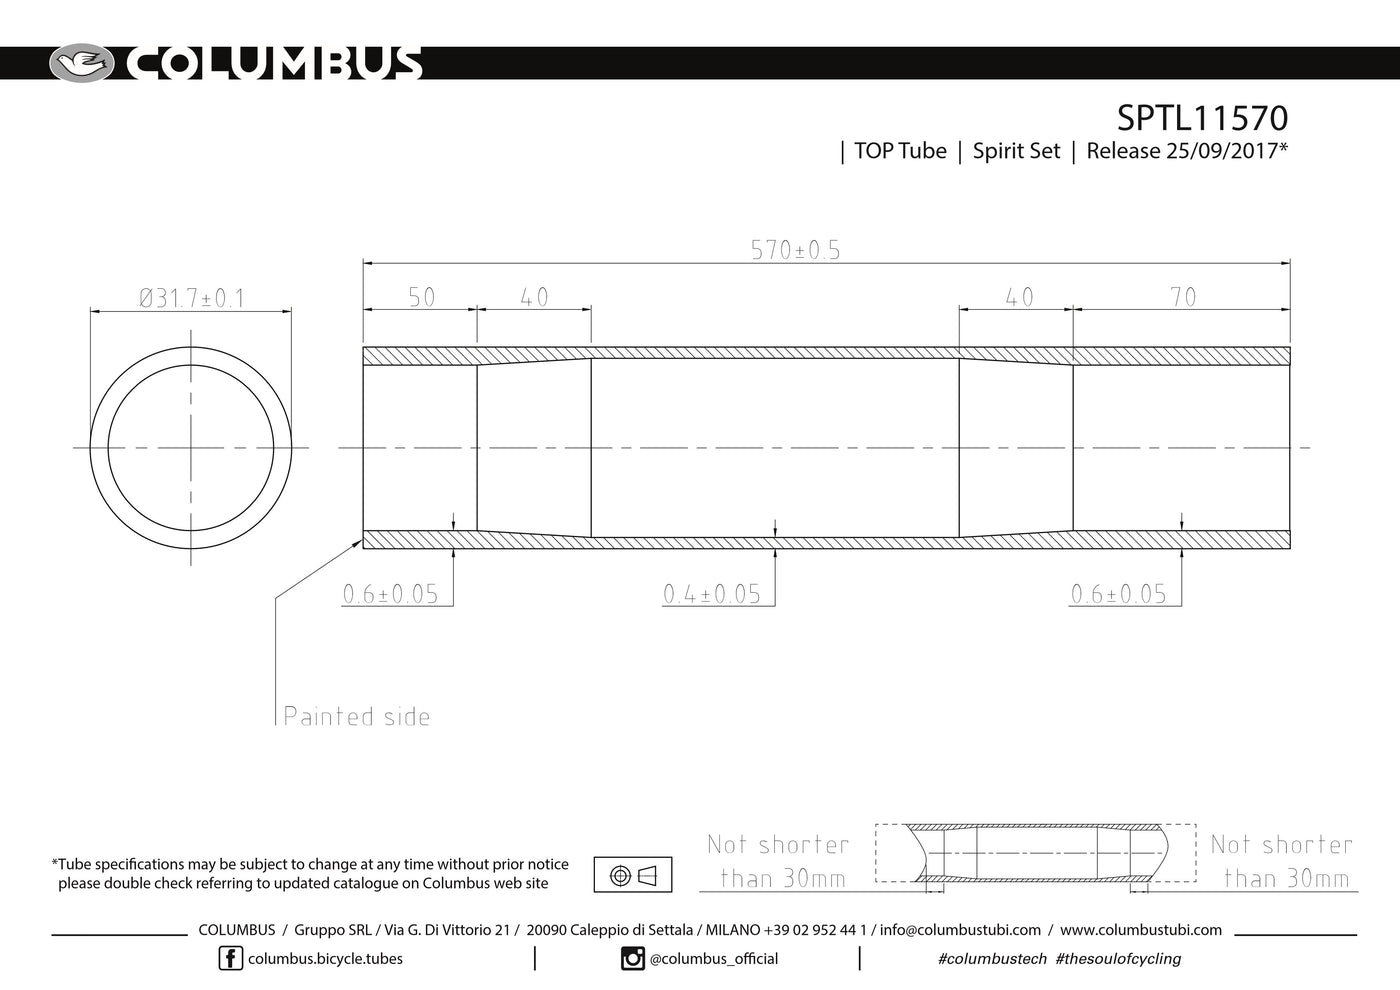 SPTL11570  Columbus Tubing Spirit top tube - 31.7 diameter - .6/.4/.6 wall thickness. Length = 570